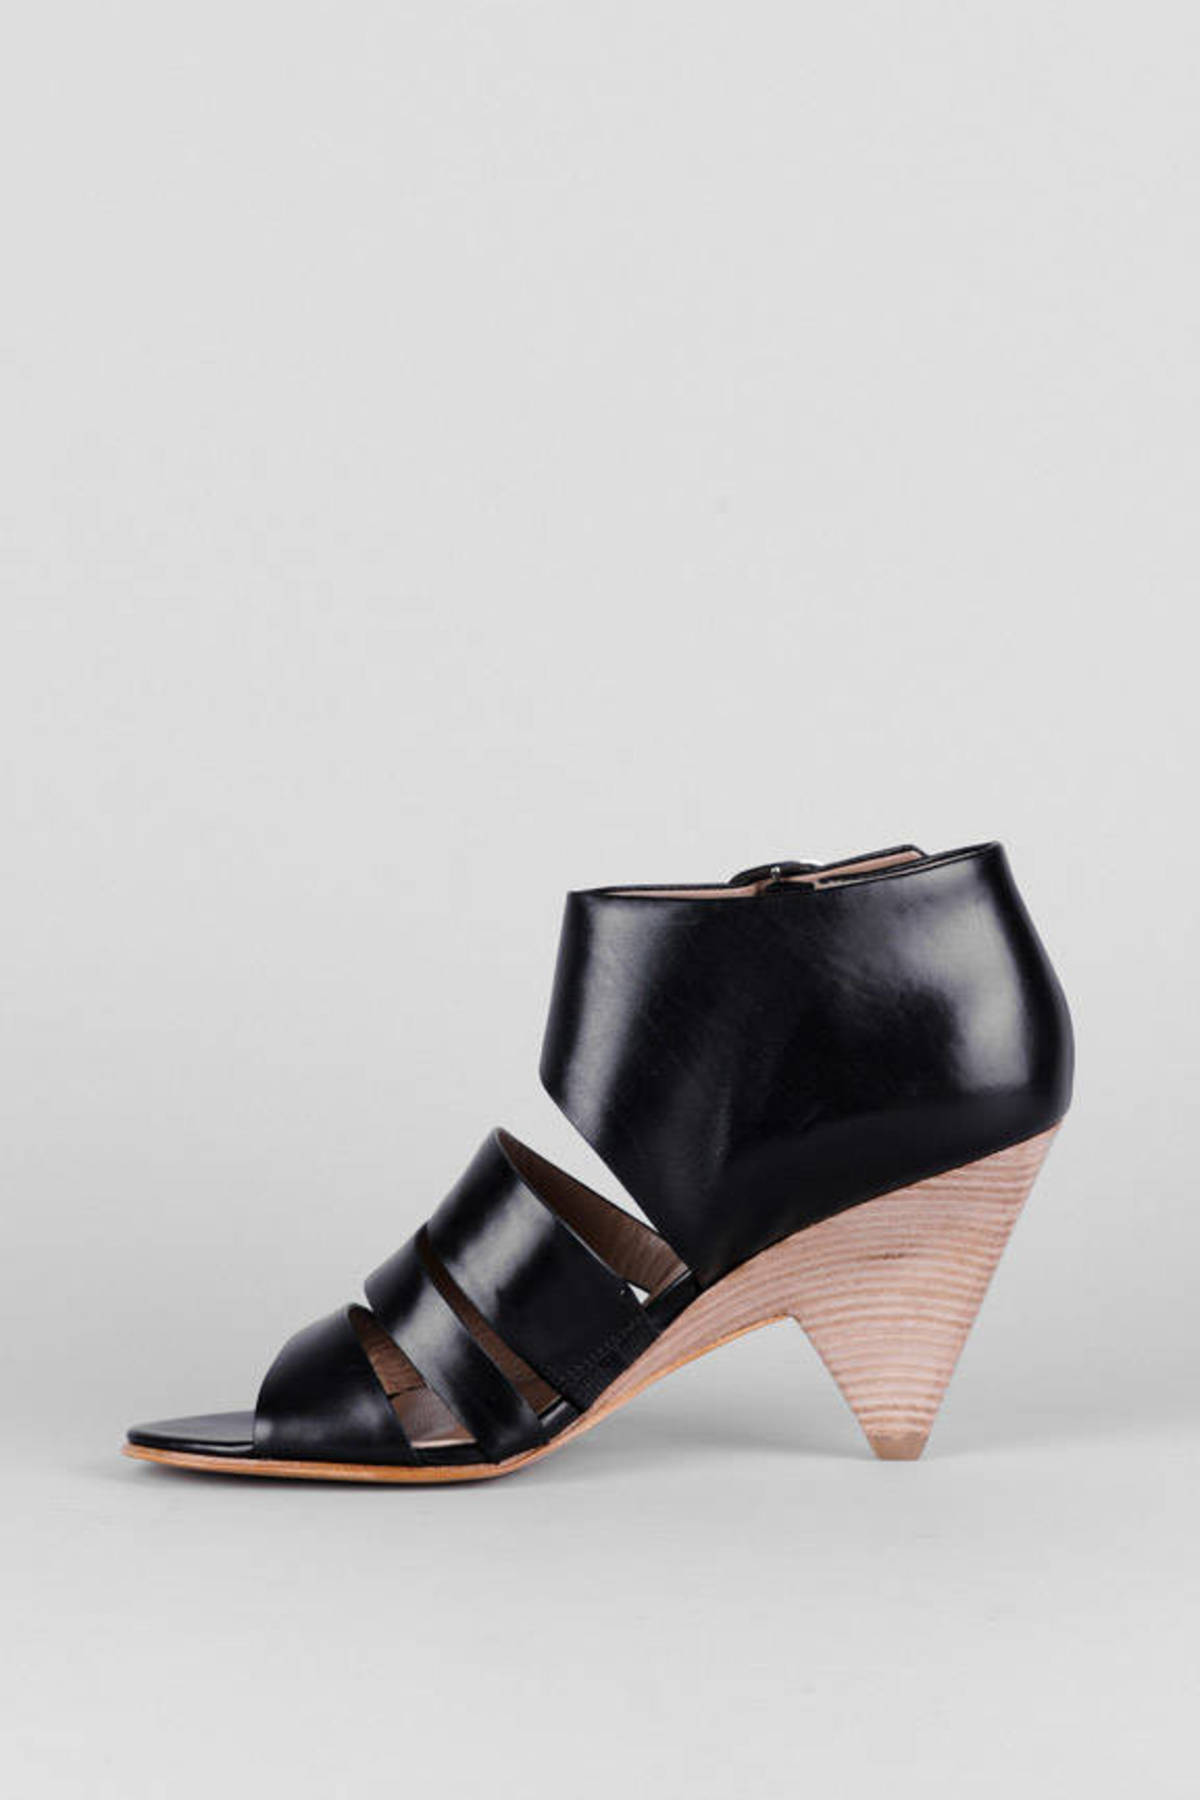 Asymmetrical Sandals in Black Leather - $79 | Tobi US